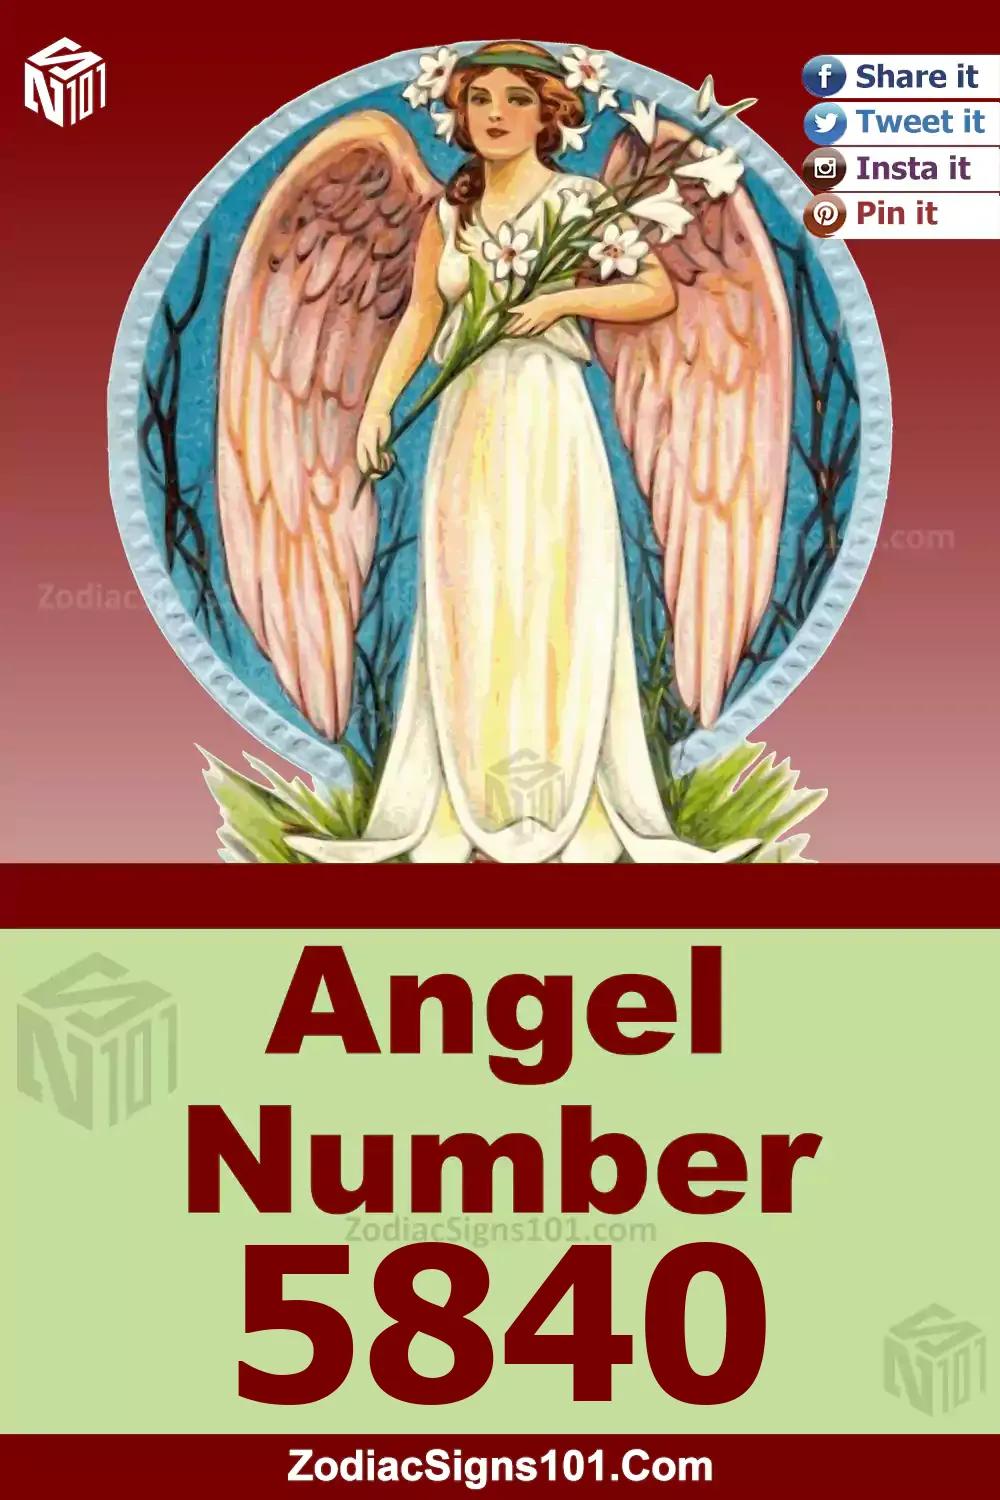 5840-Angel-Number-Meaning.jpg